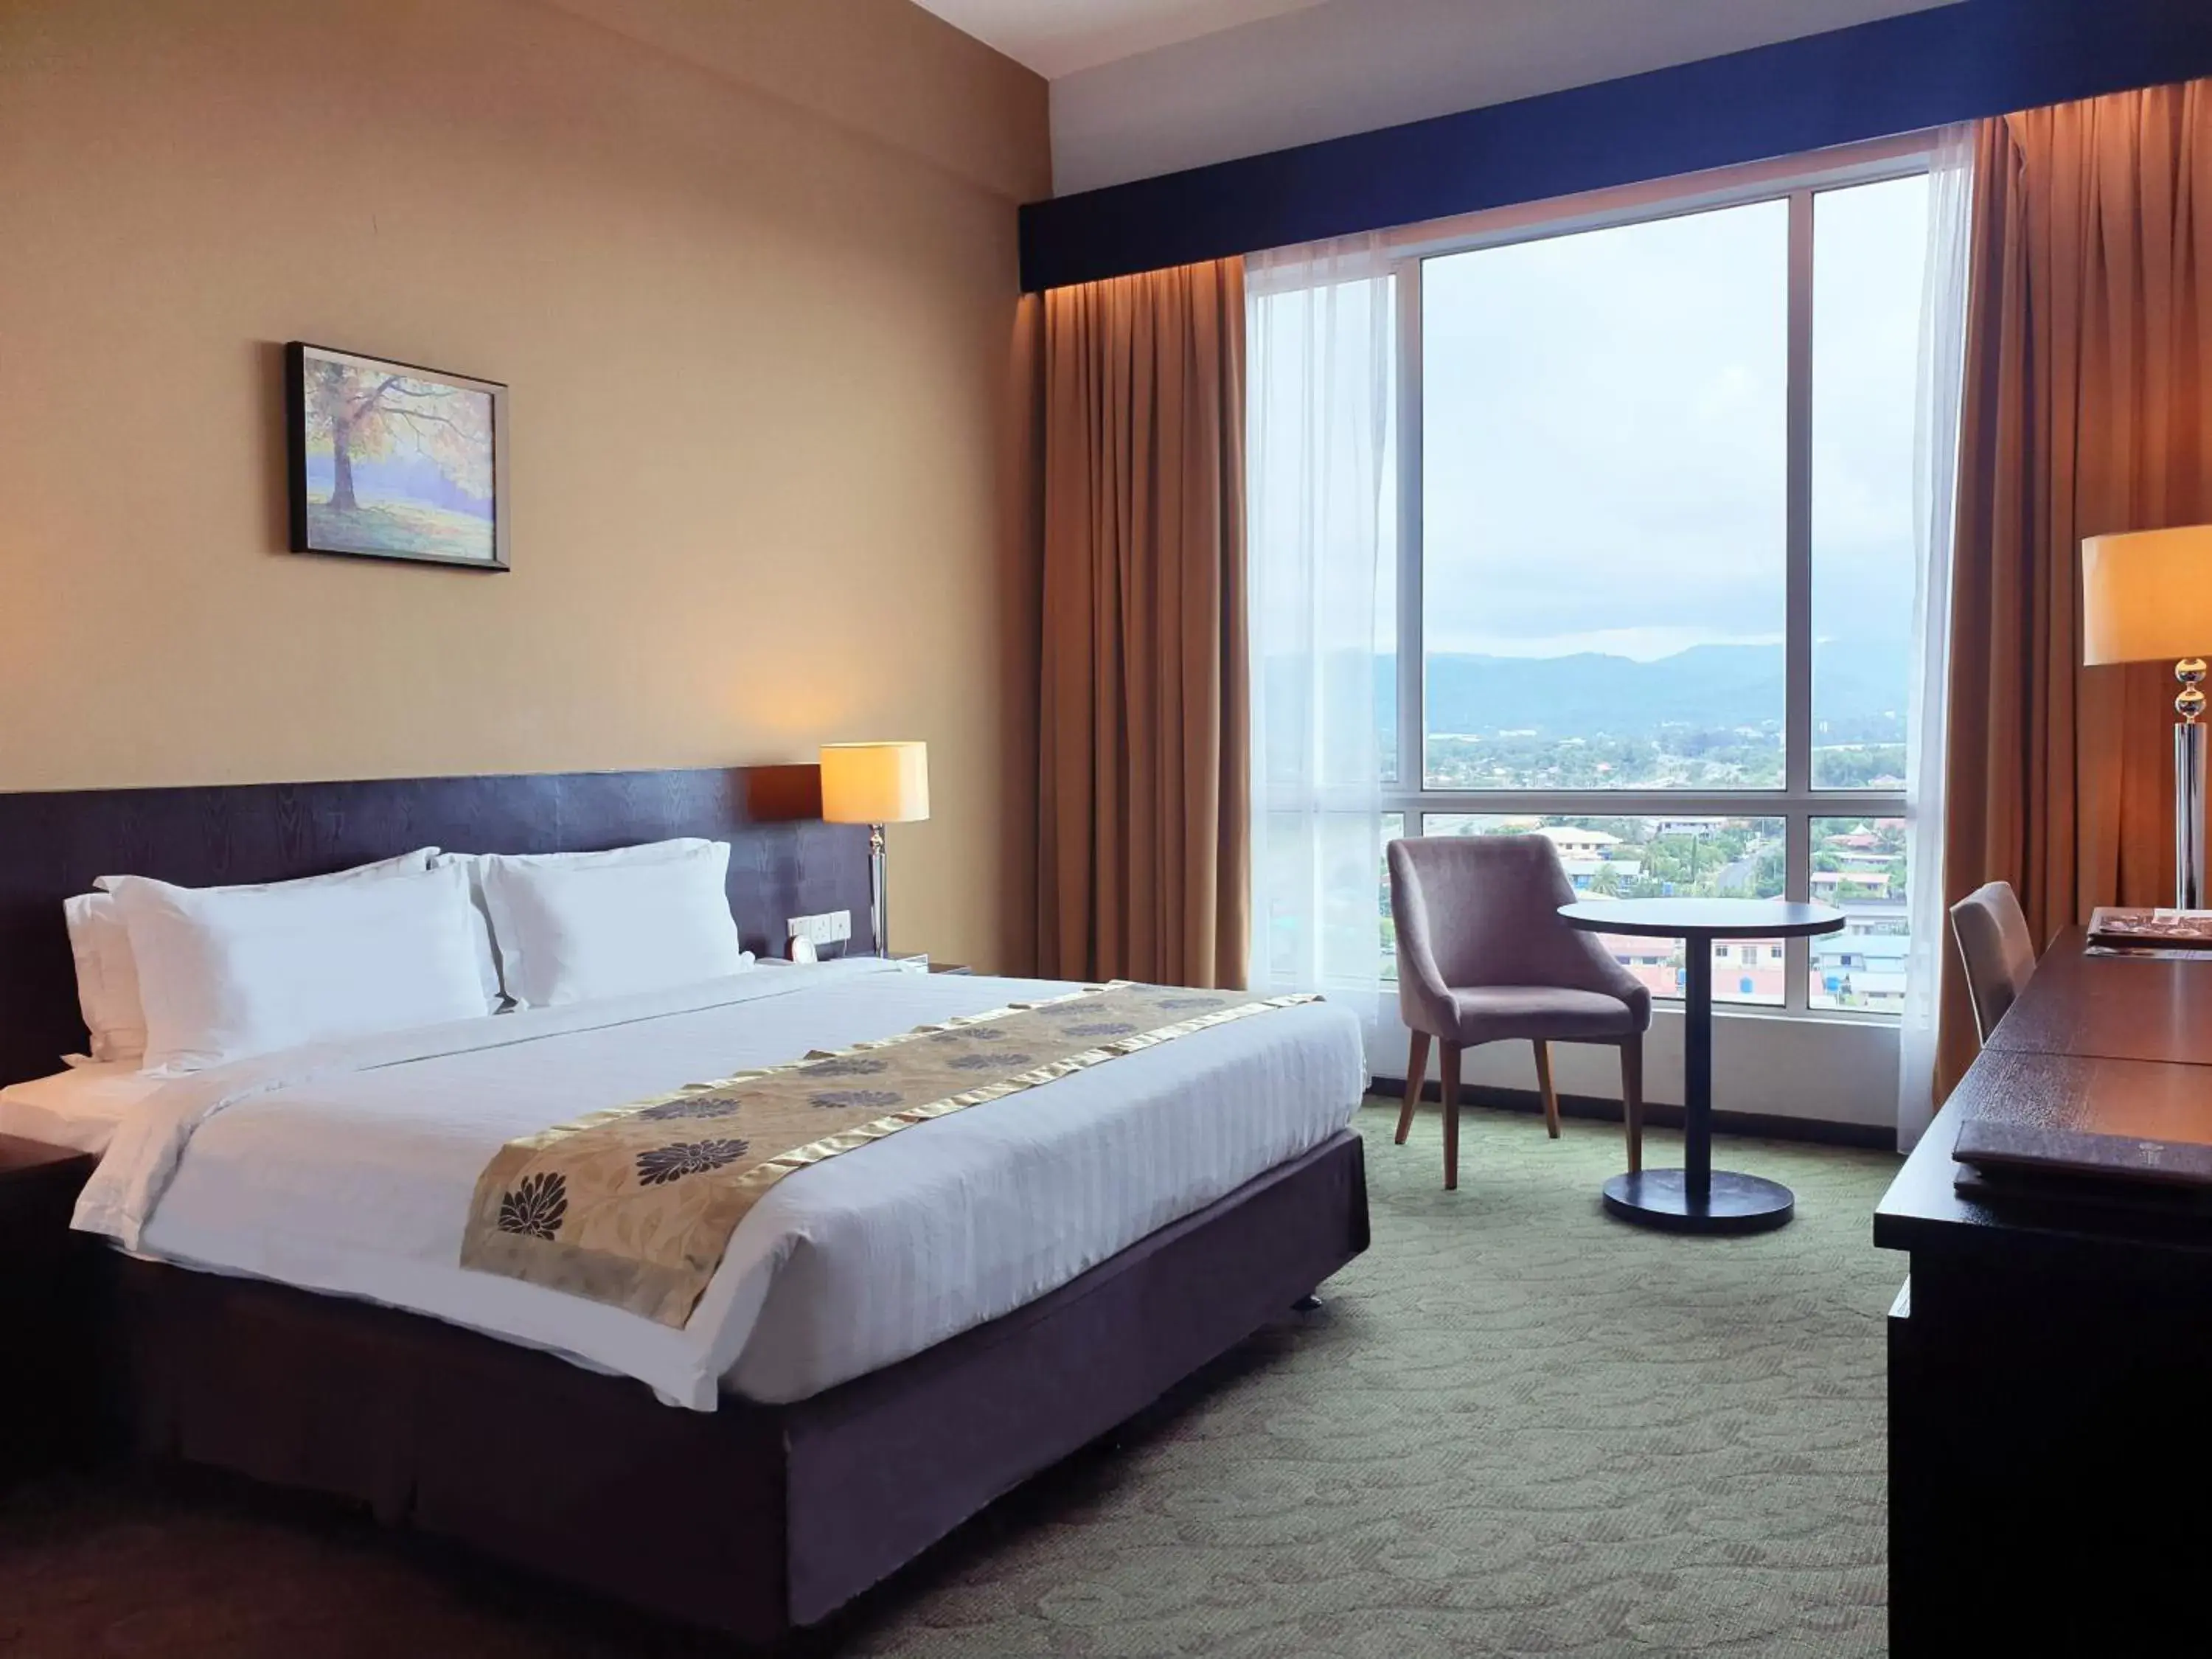 Bed in Pan Borneo Hotel Kota Kinabalu